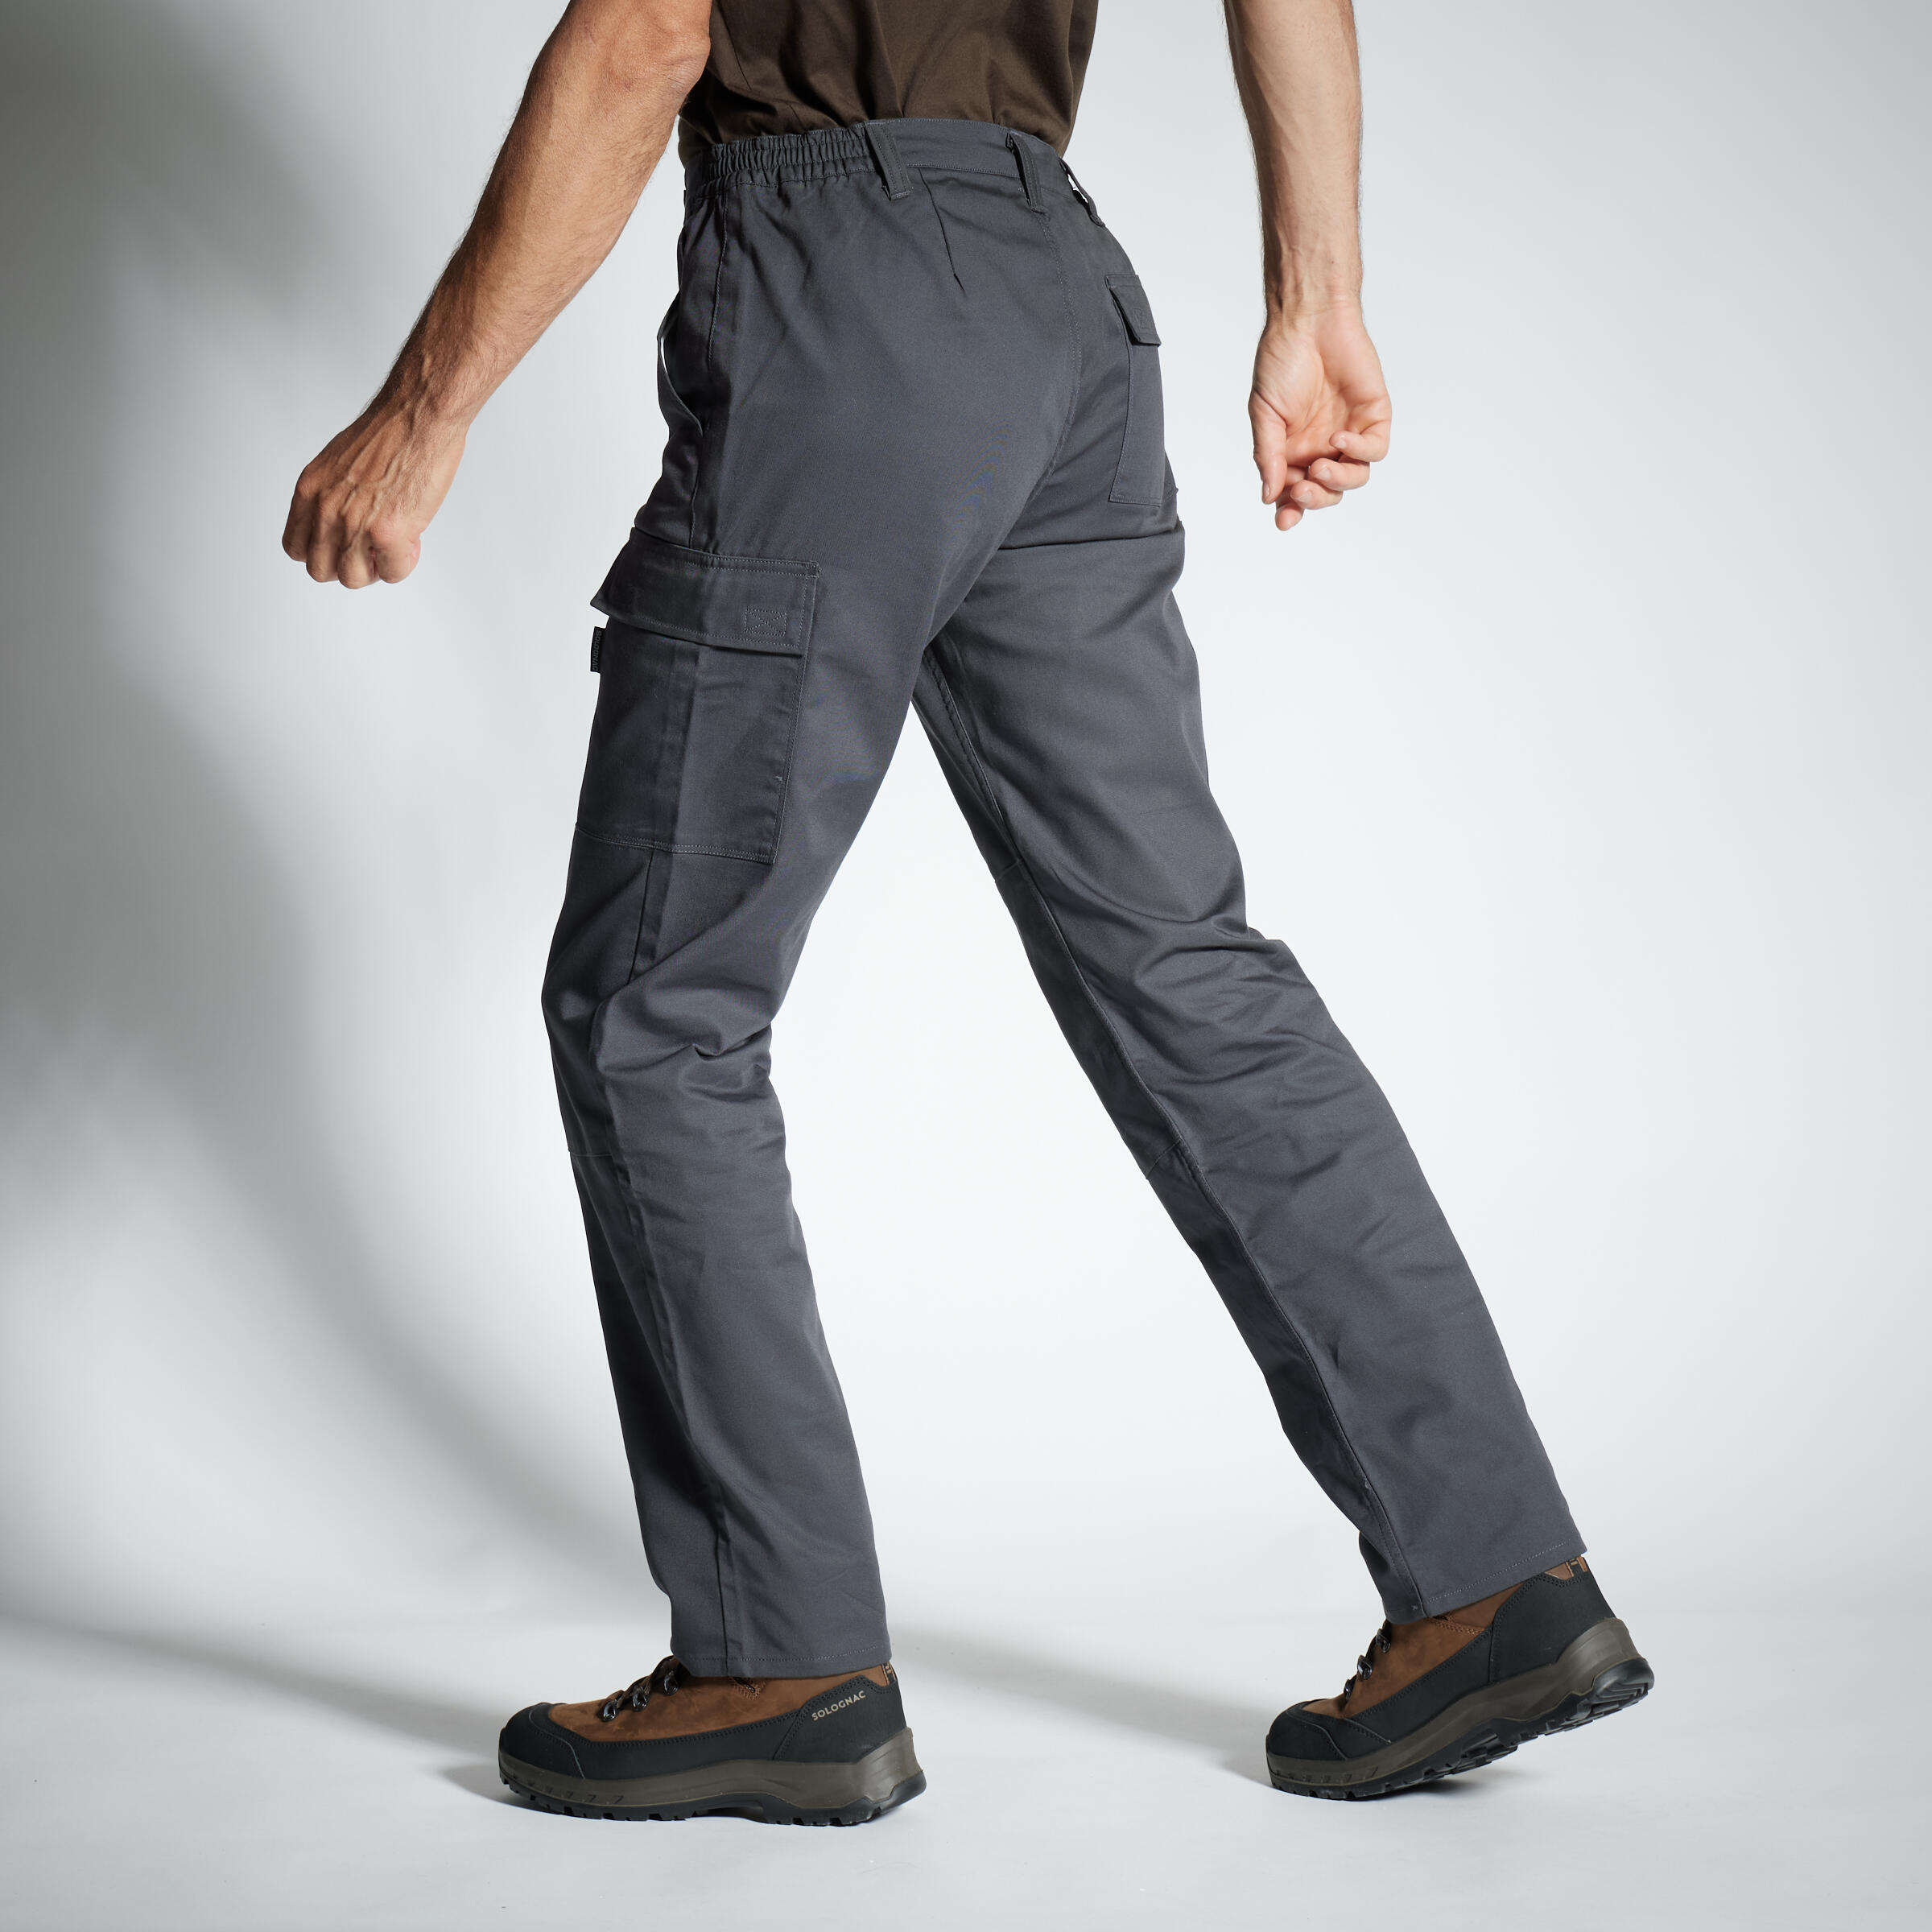 Buy Grey Trousers  Pants for Men by IVOC Online  Ajiocom